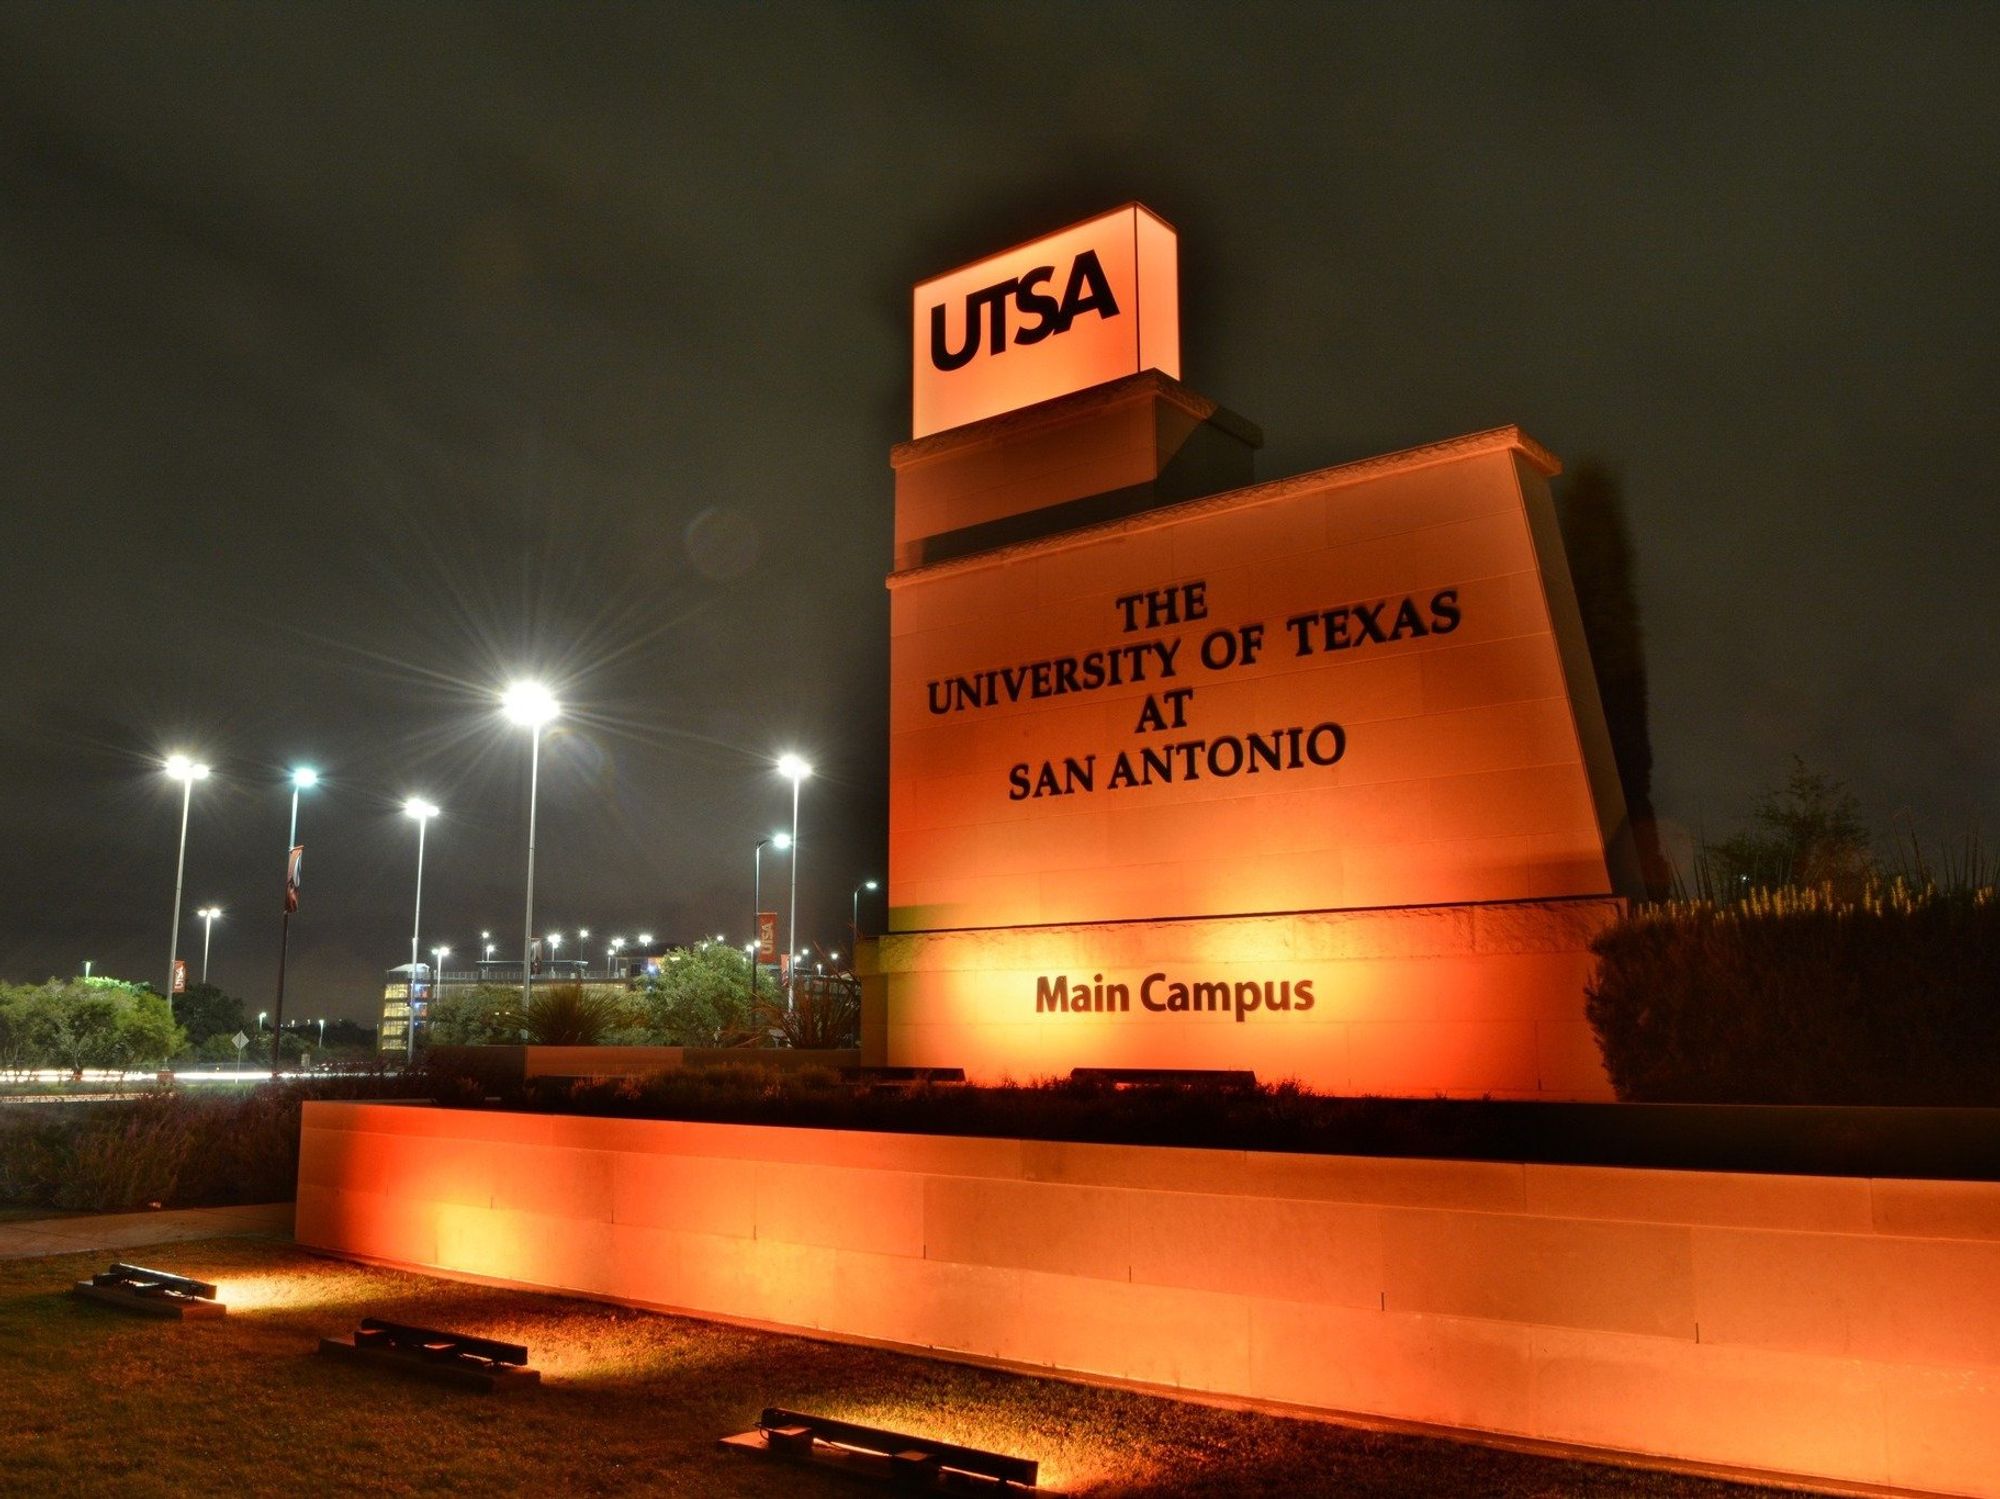 University of Texas at San Antonio, UTSA